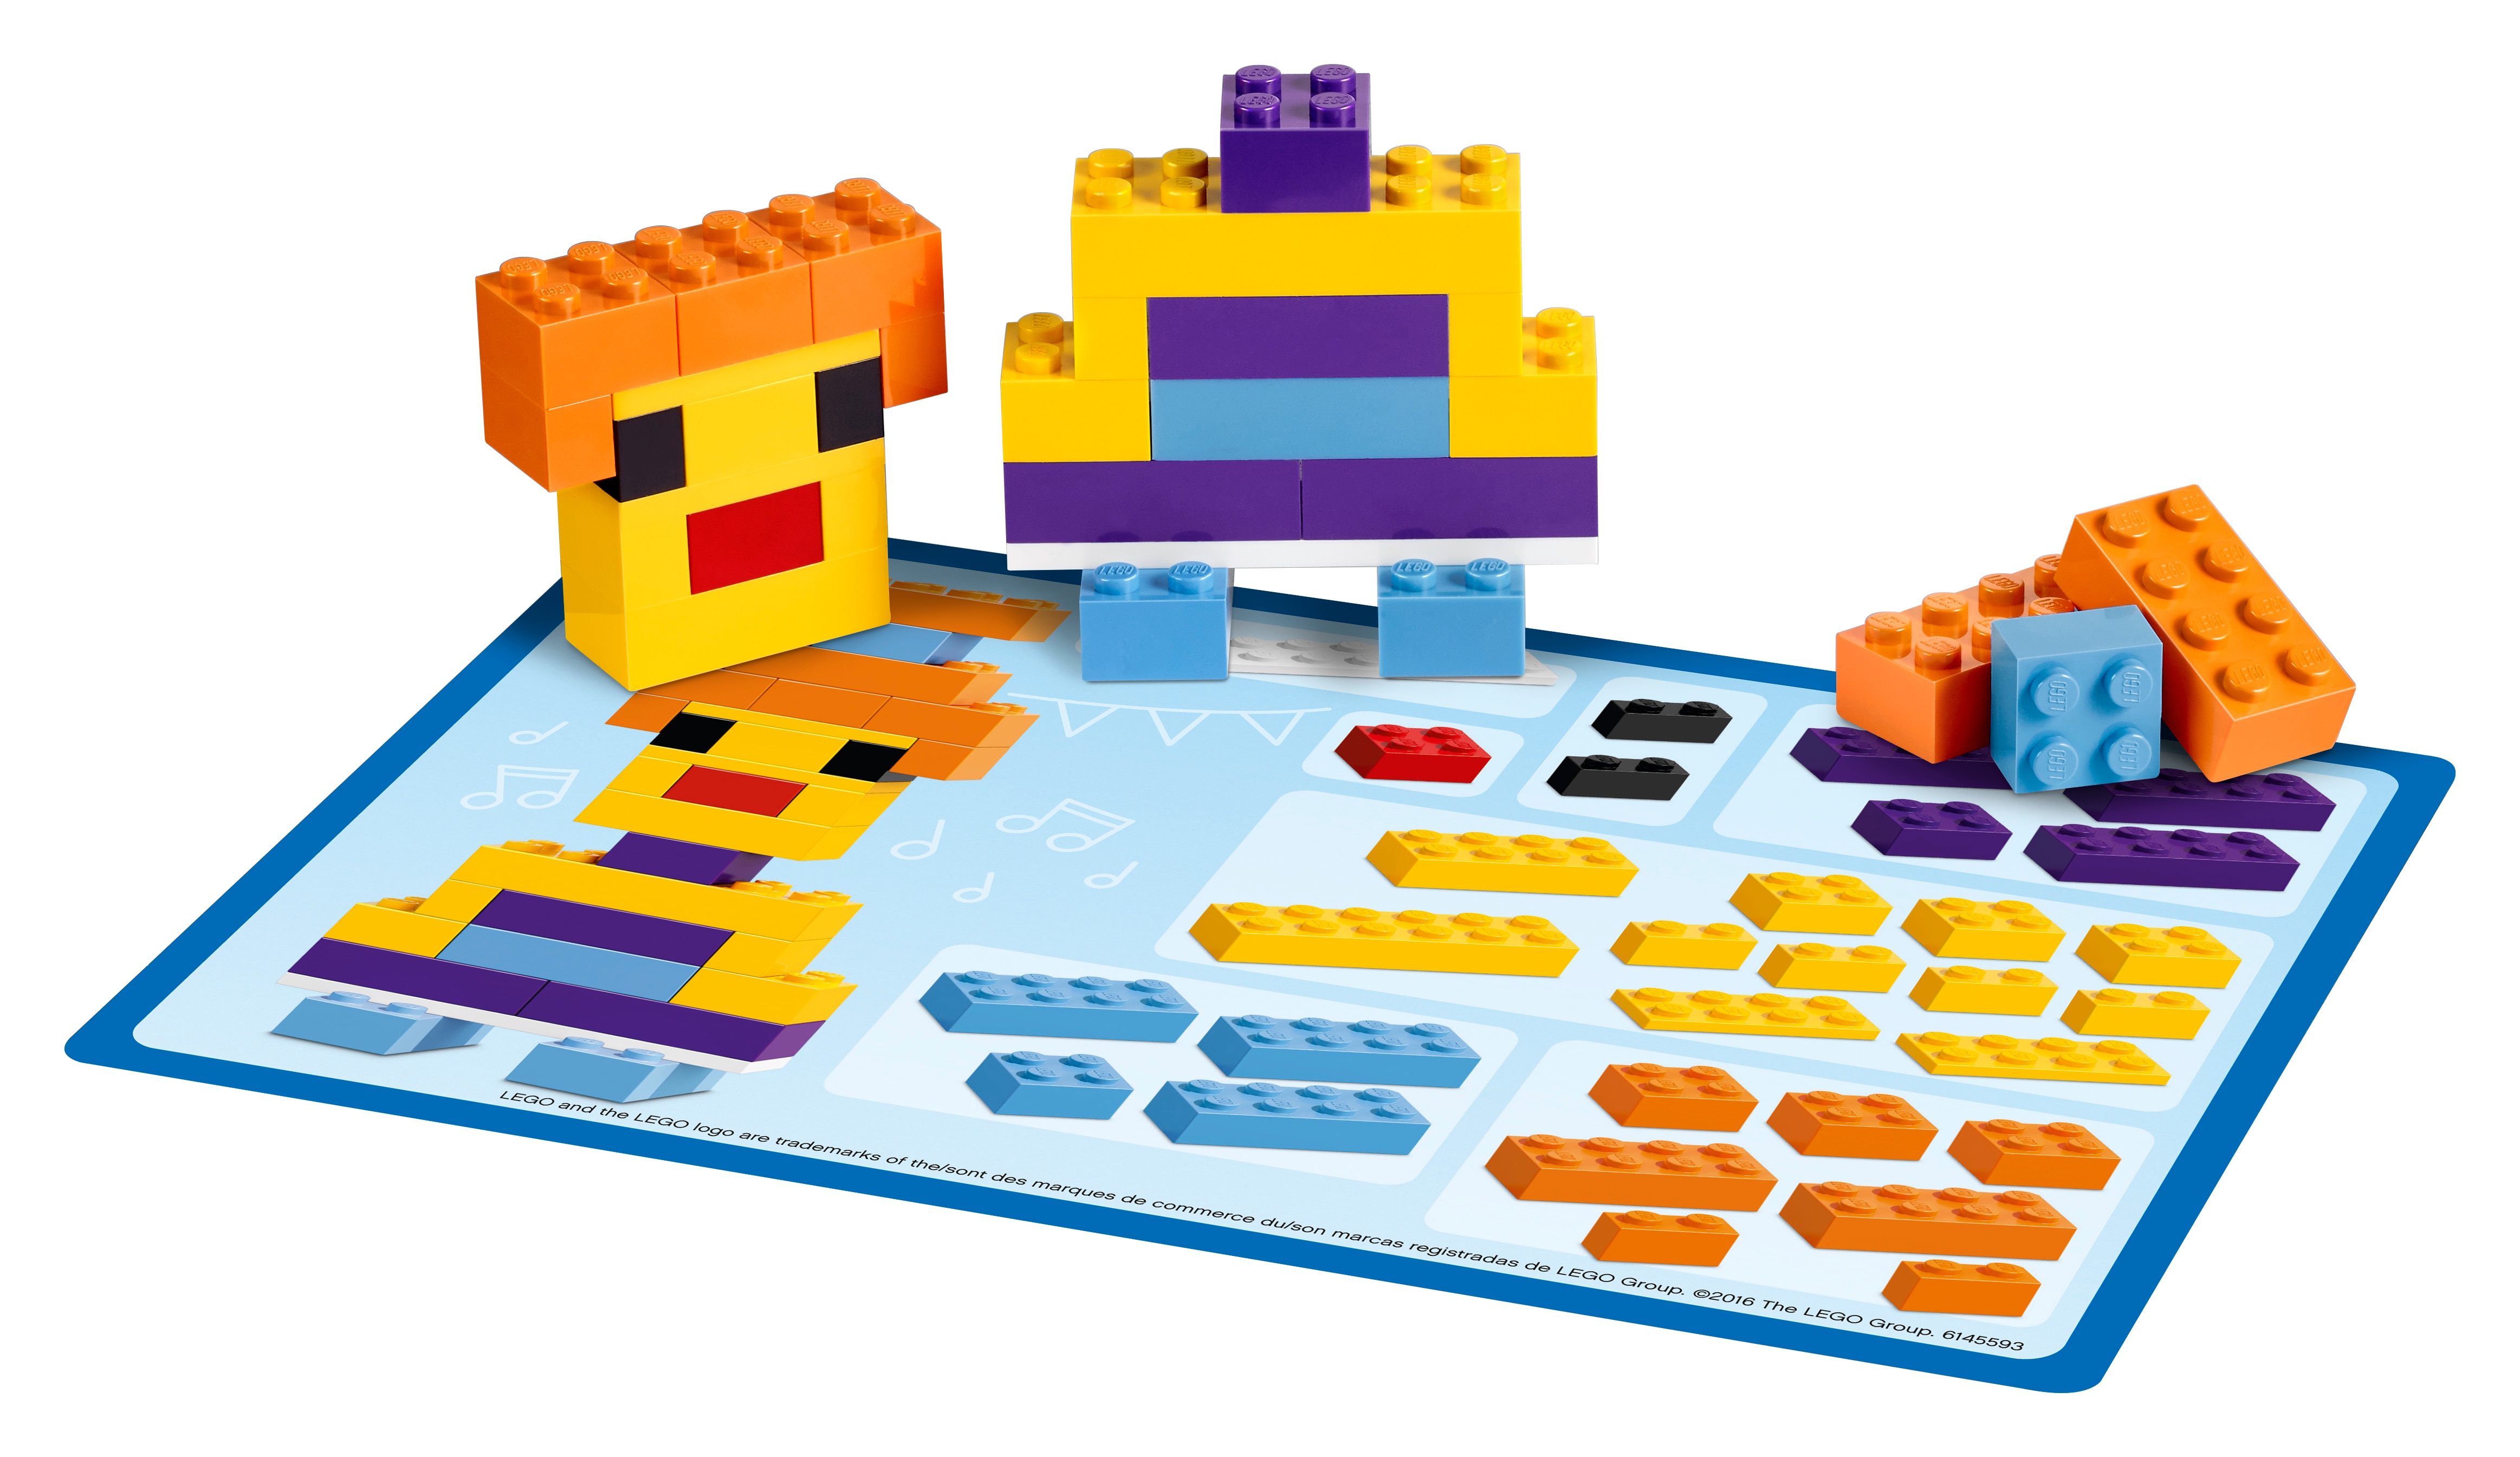 4 x LEGO red slope brick ref 3676 Set 7419 5590 6597 10159 4539 5764 ....